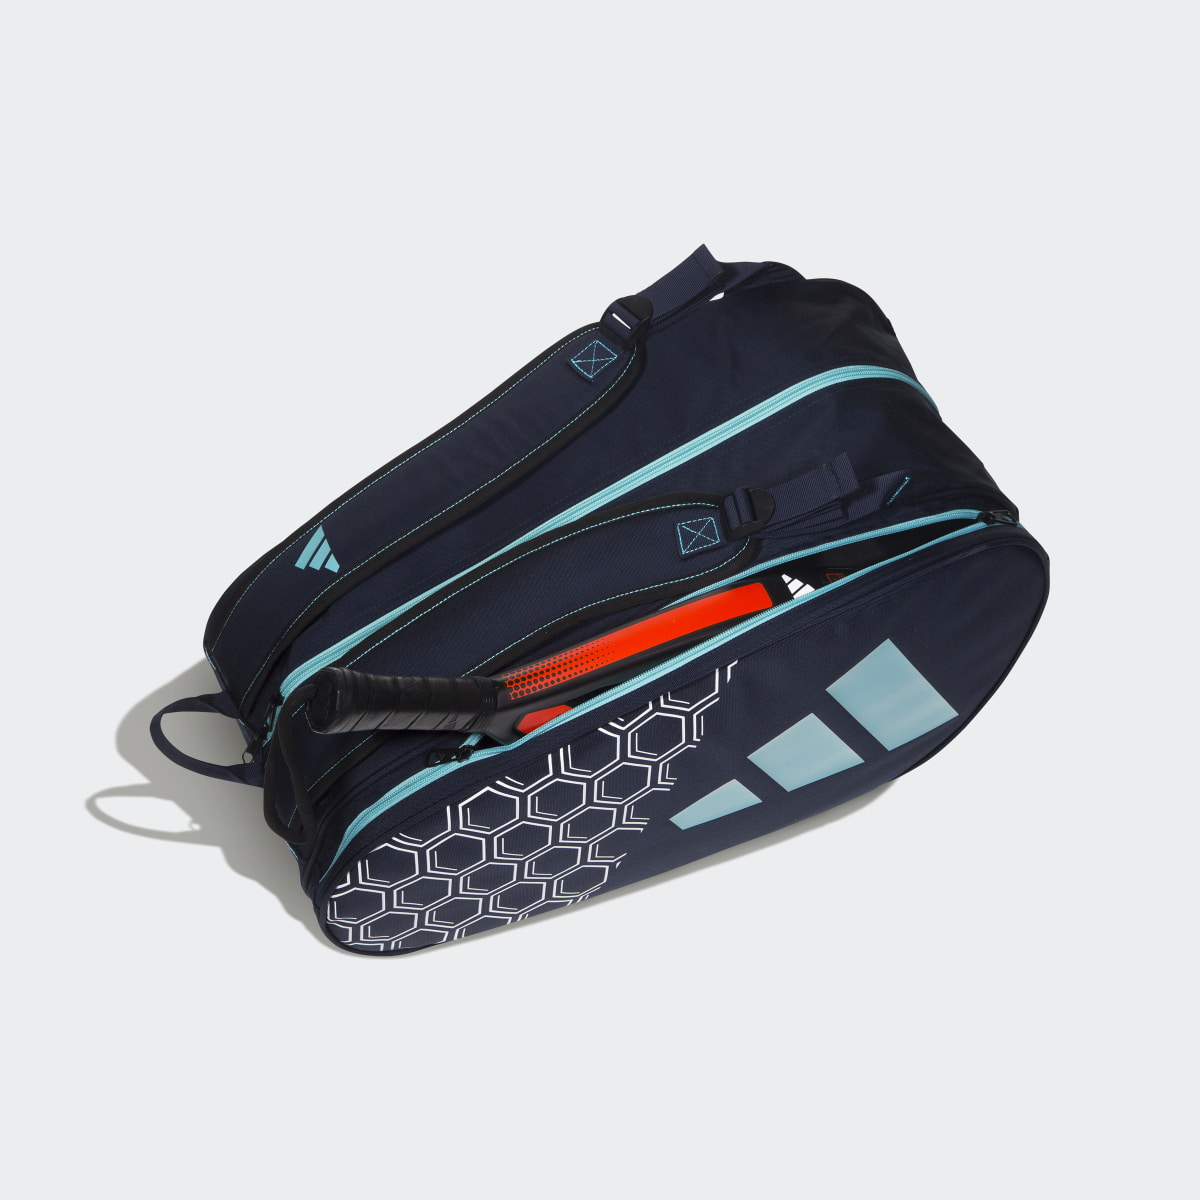 Adidas Control 3.0 Racket Bag. 5